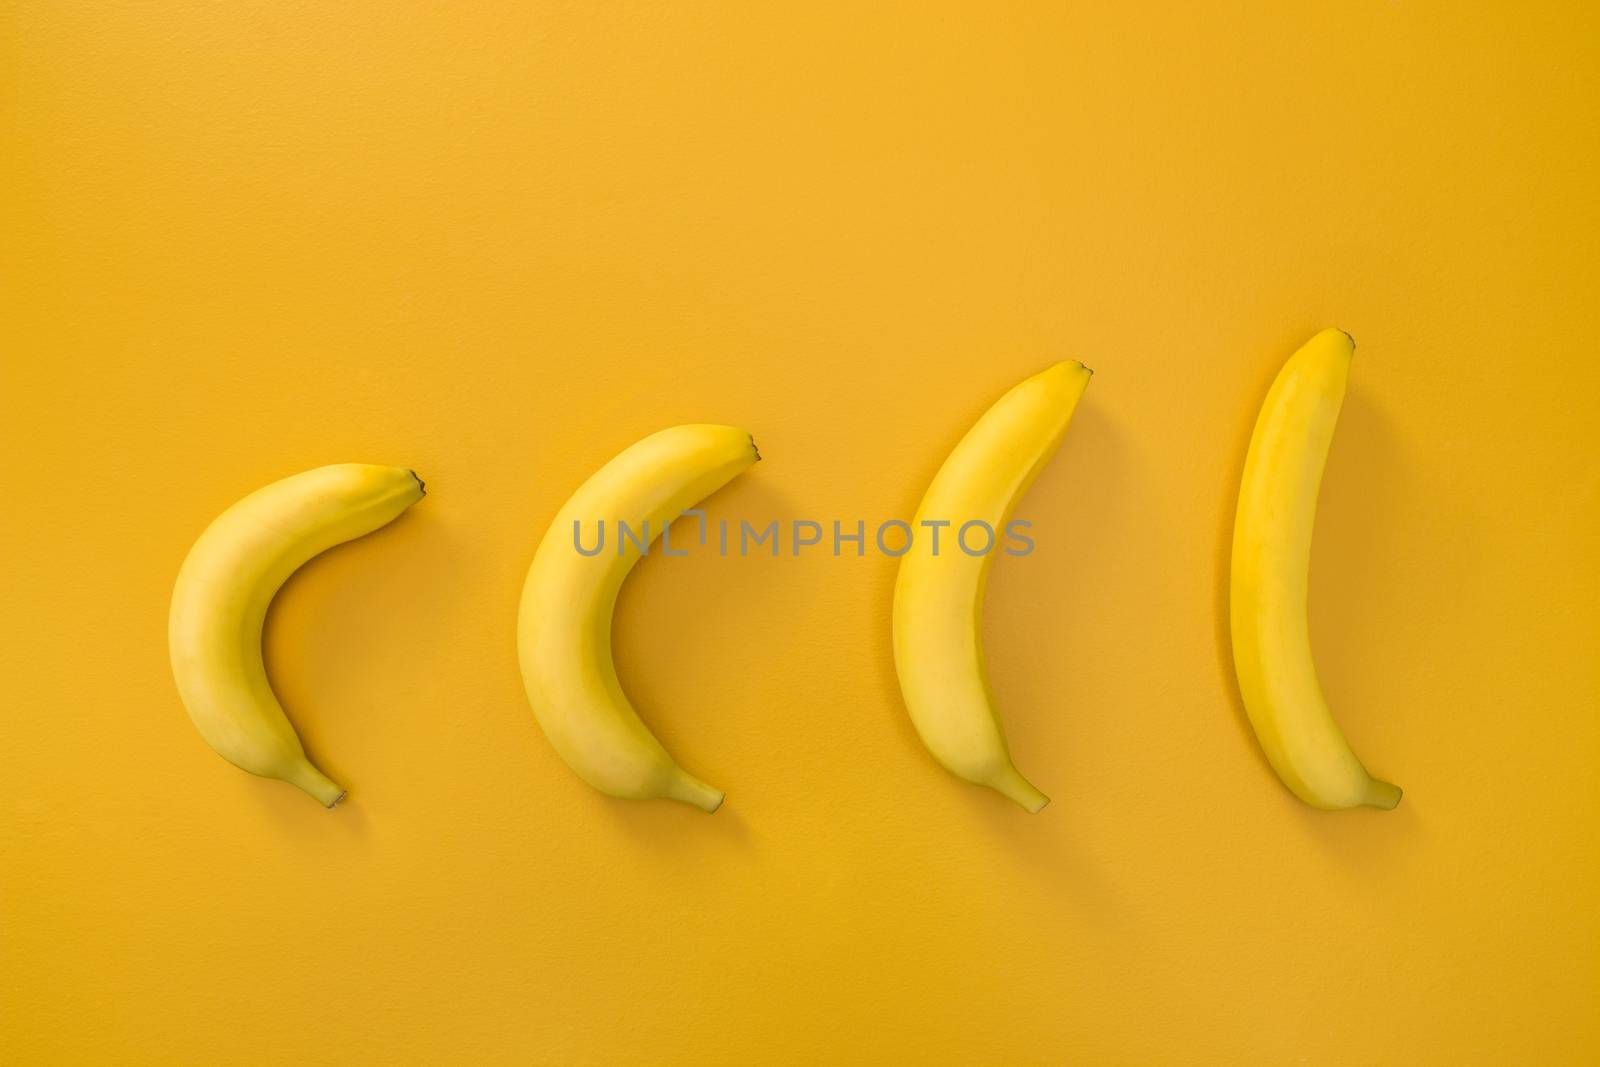 Bananas illustrating evolution theory, on vivid yellow background.